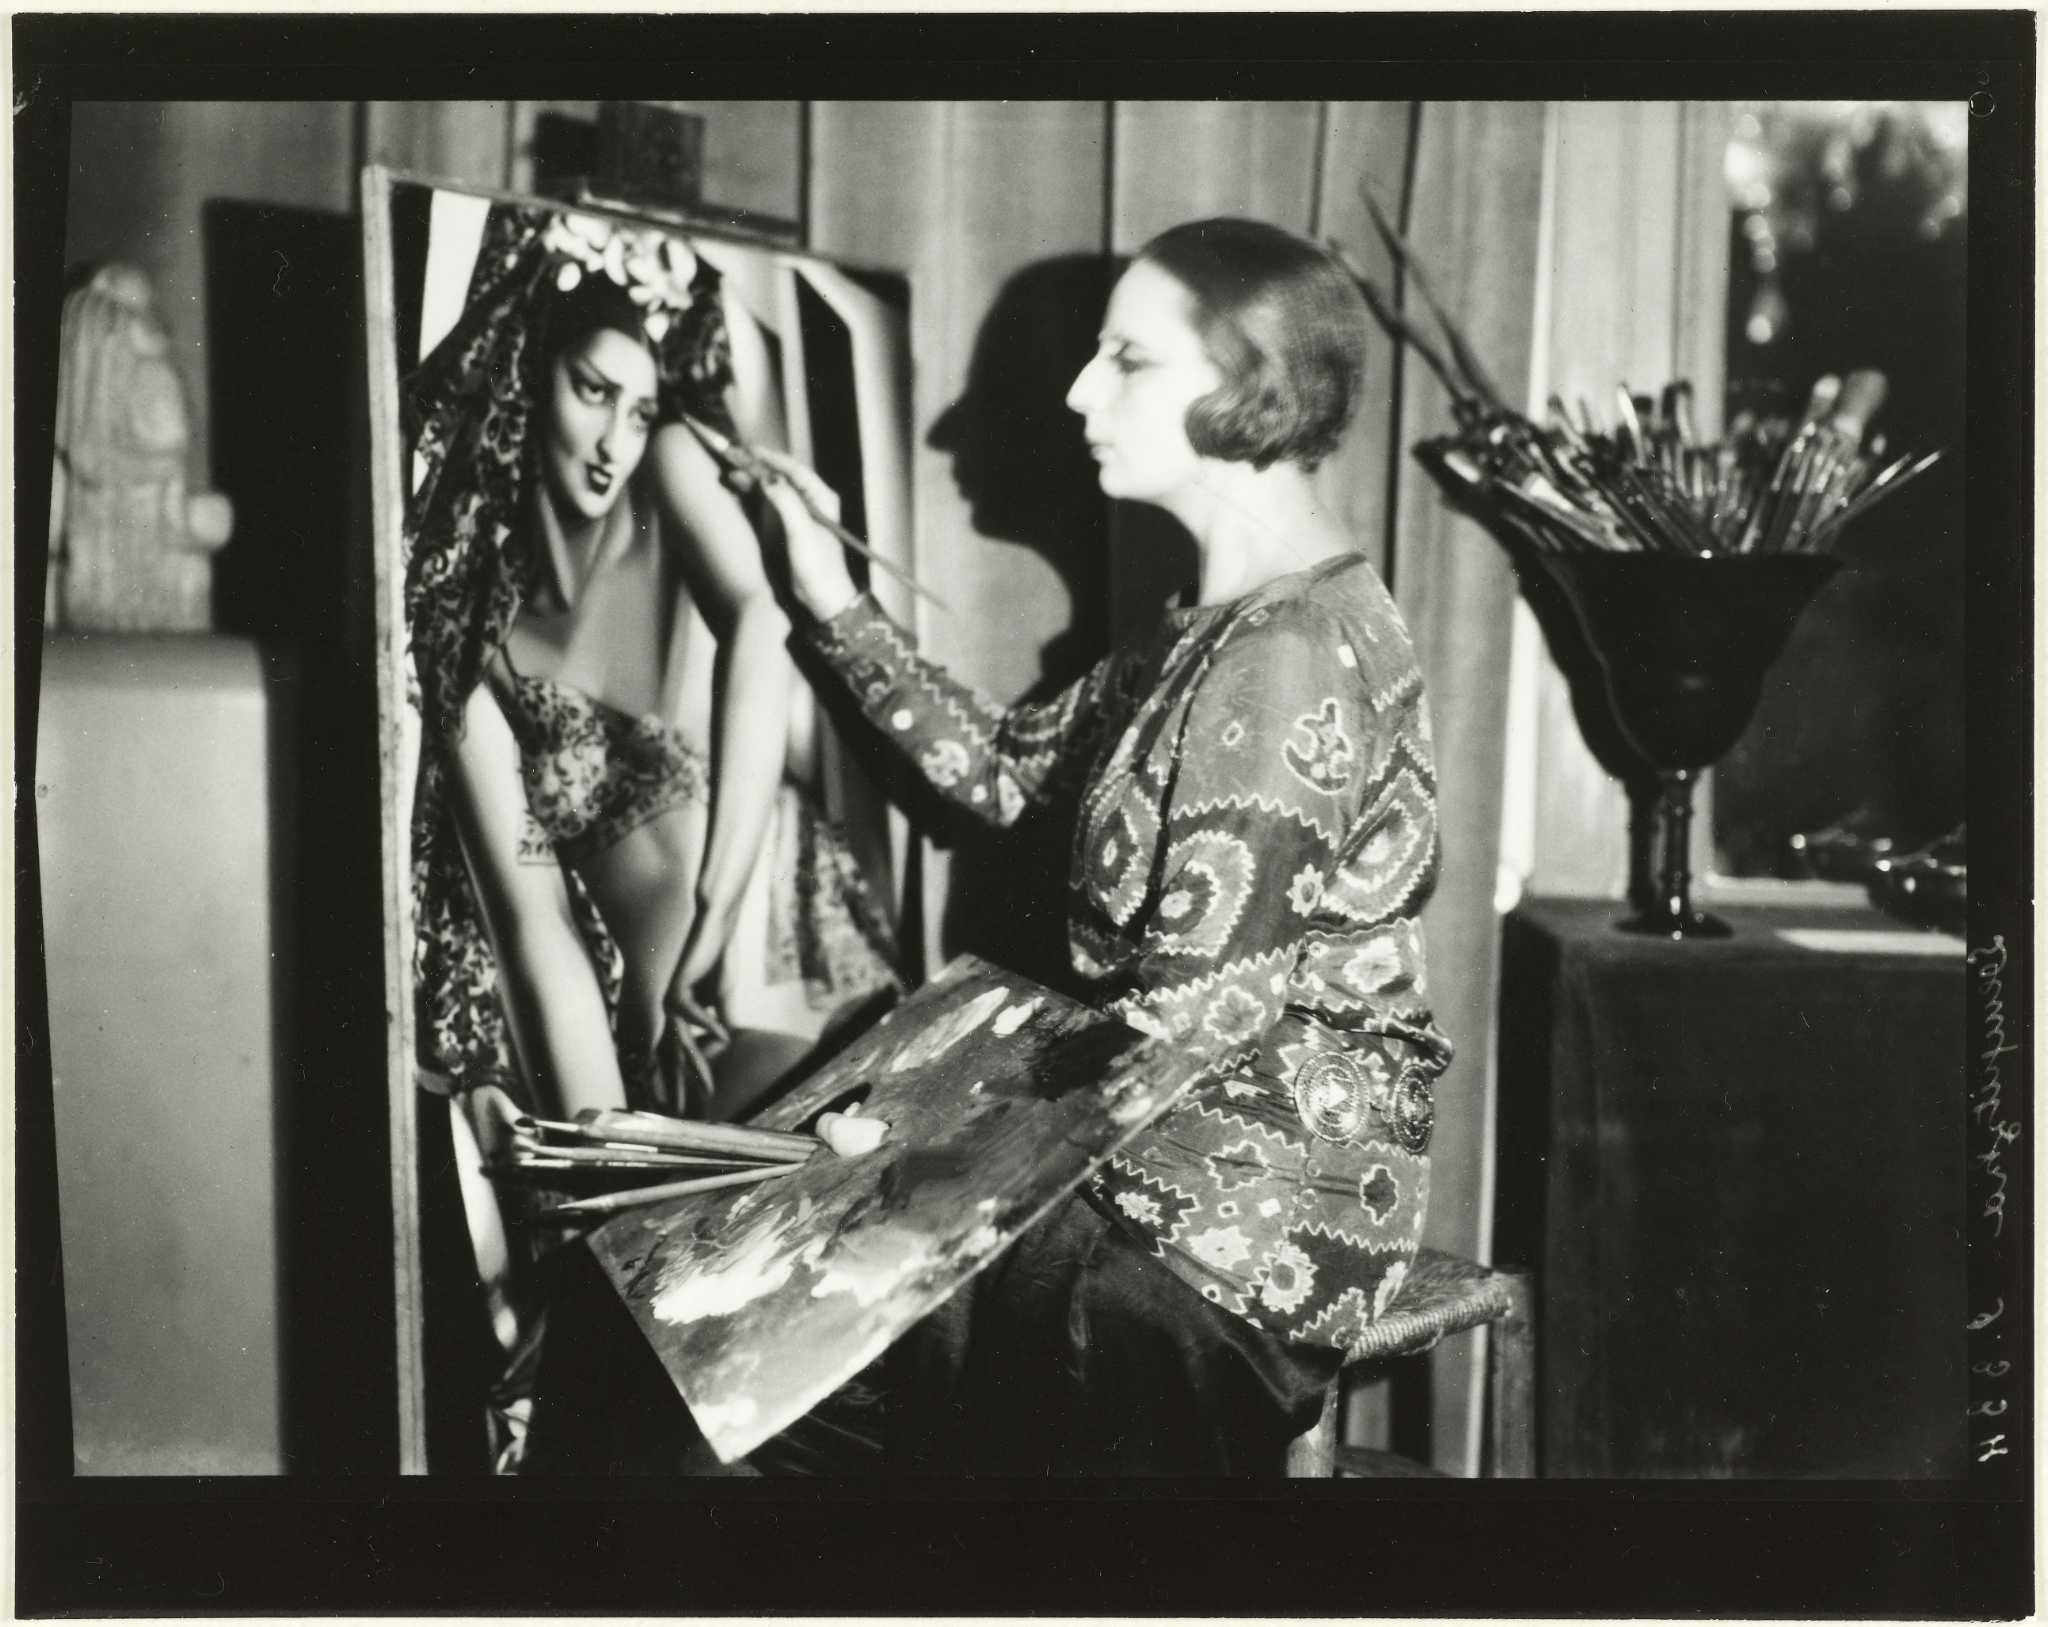 S.F. museum to bring first U.S. museum retrospective of Tamara de Lempicka